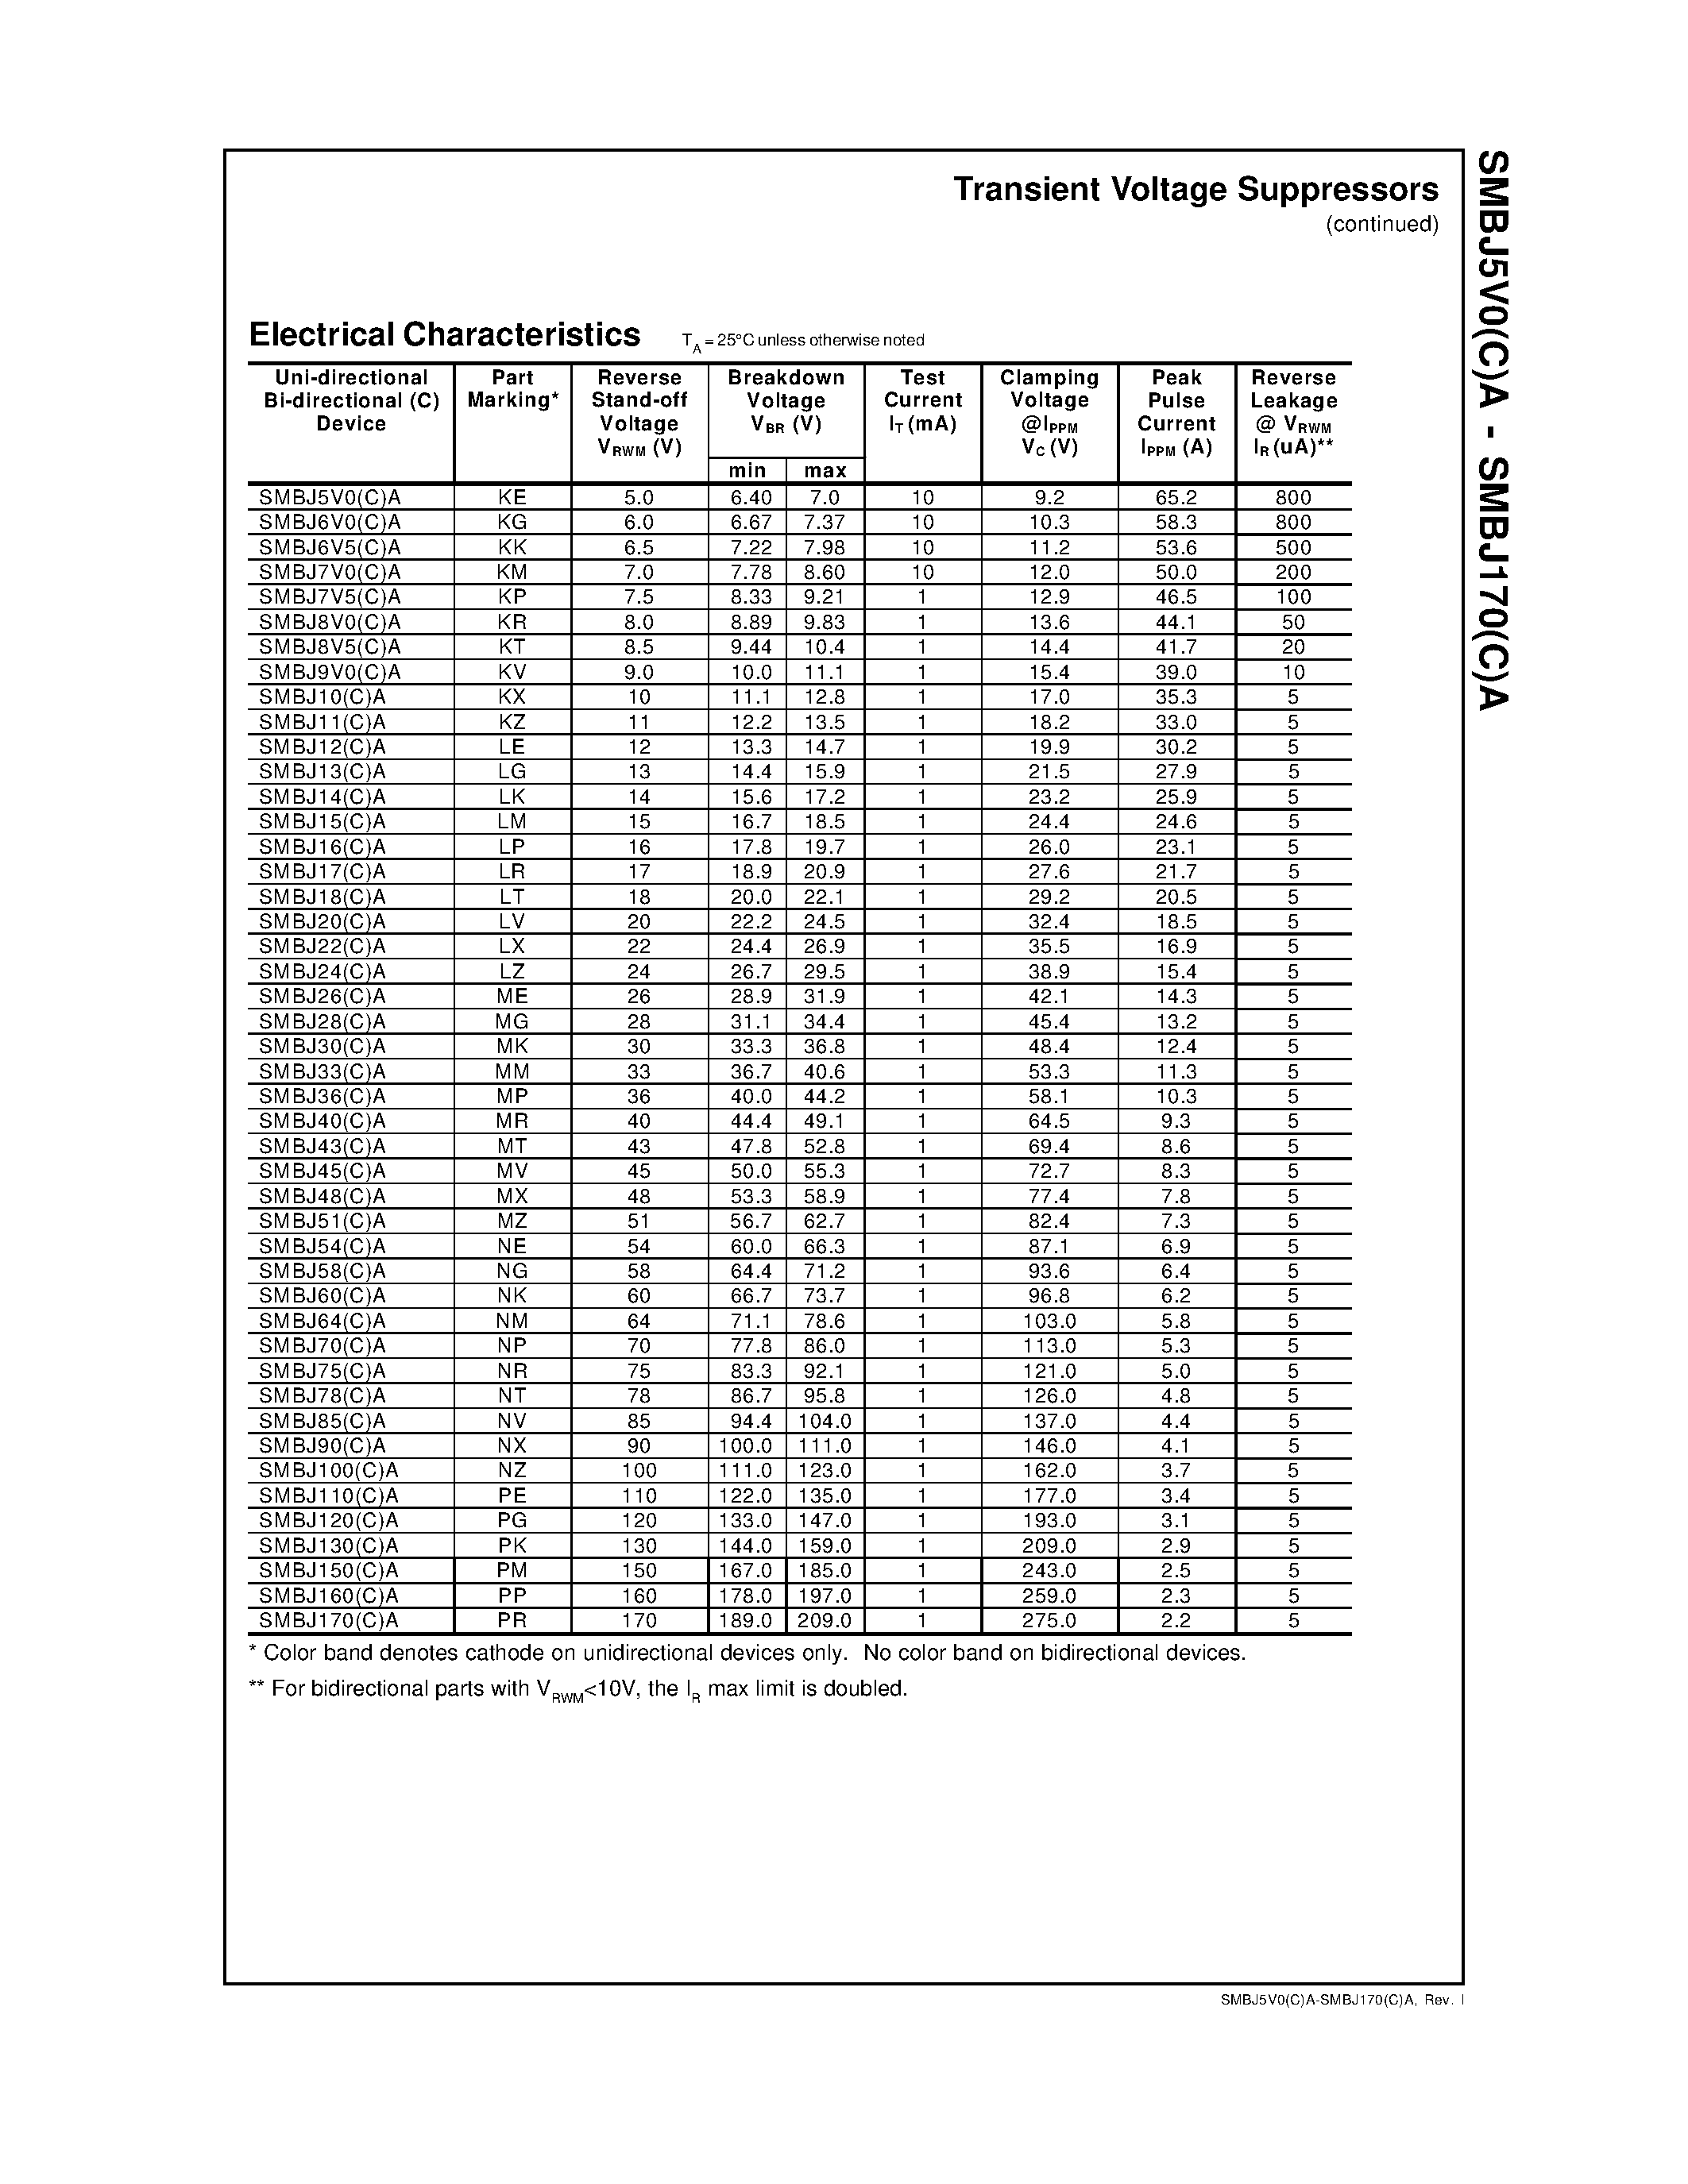 Datasheet SMBJ160A - Transient Voltage Suppressors SMBJ5V0(C)A - SMBJ170(C)A page 2